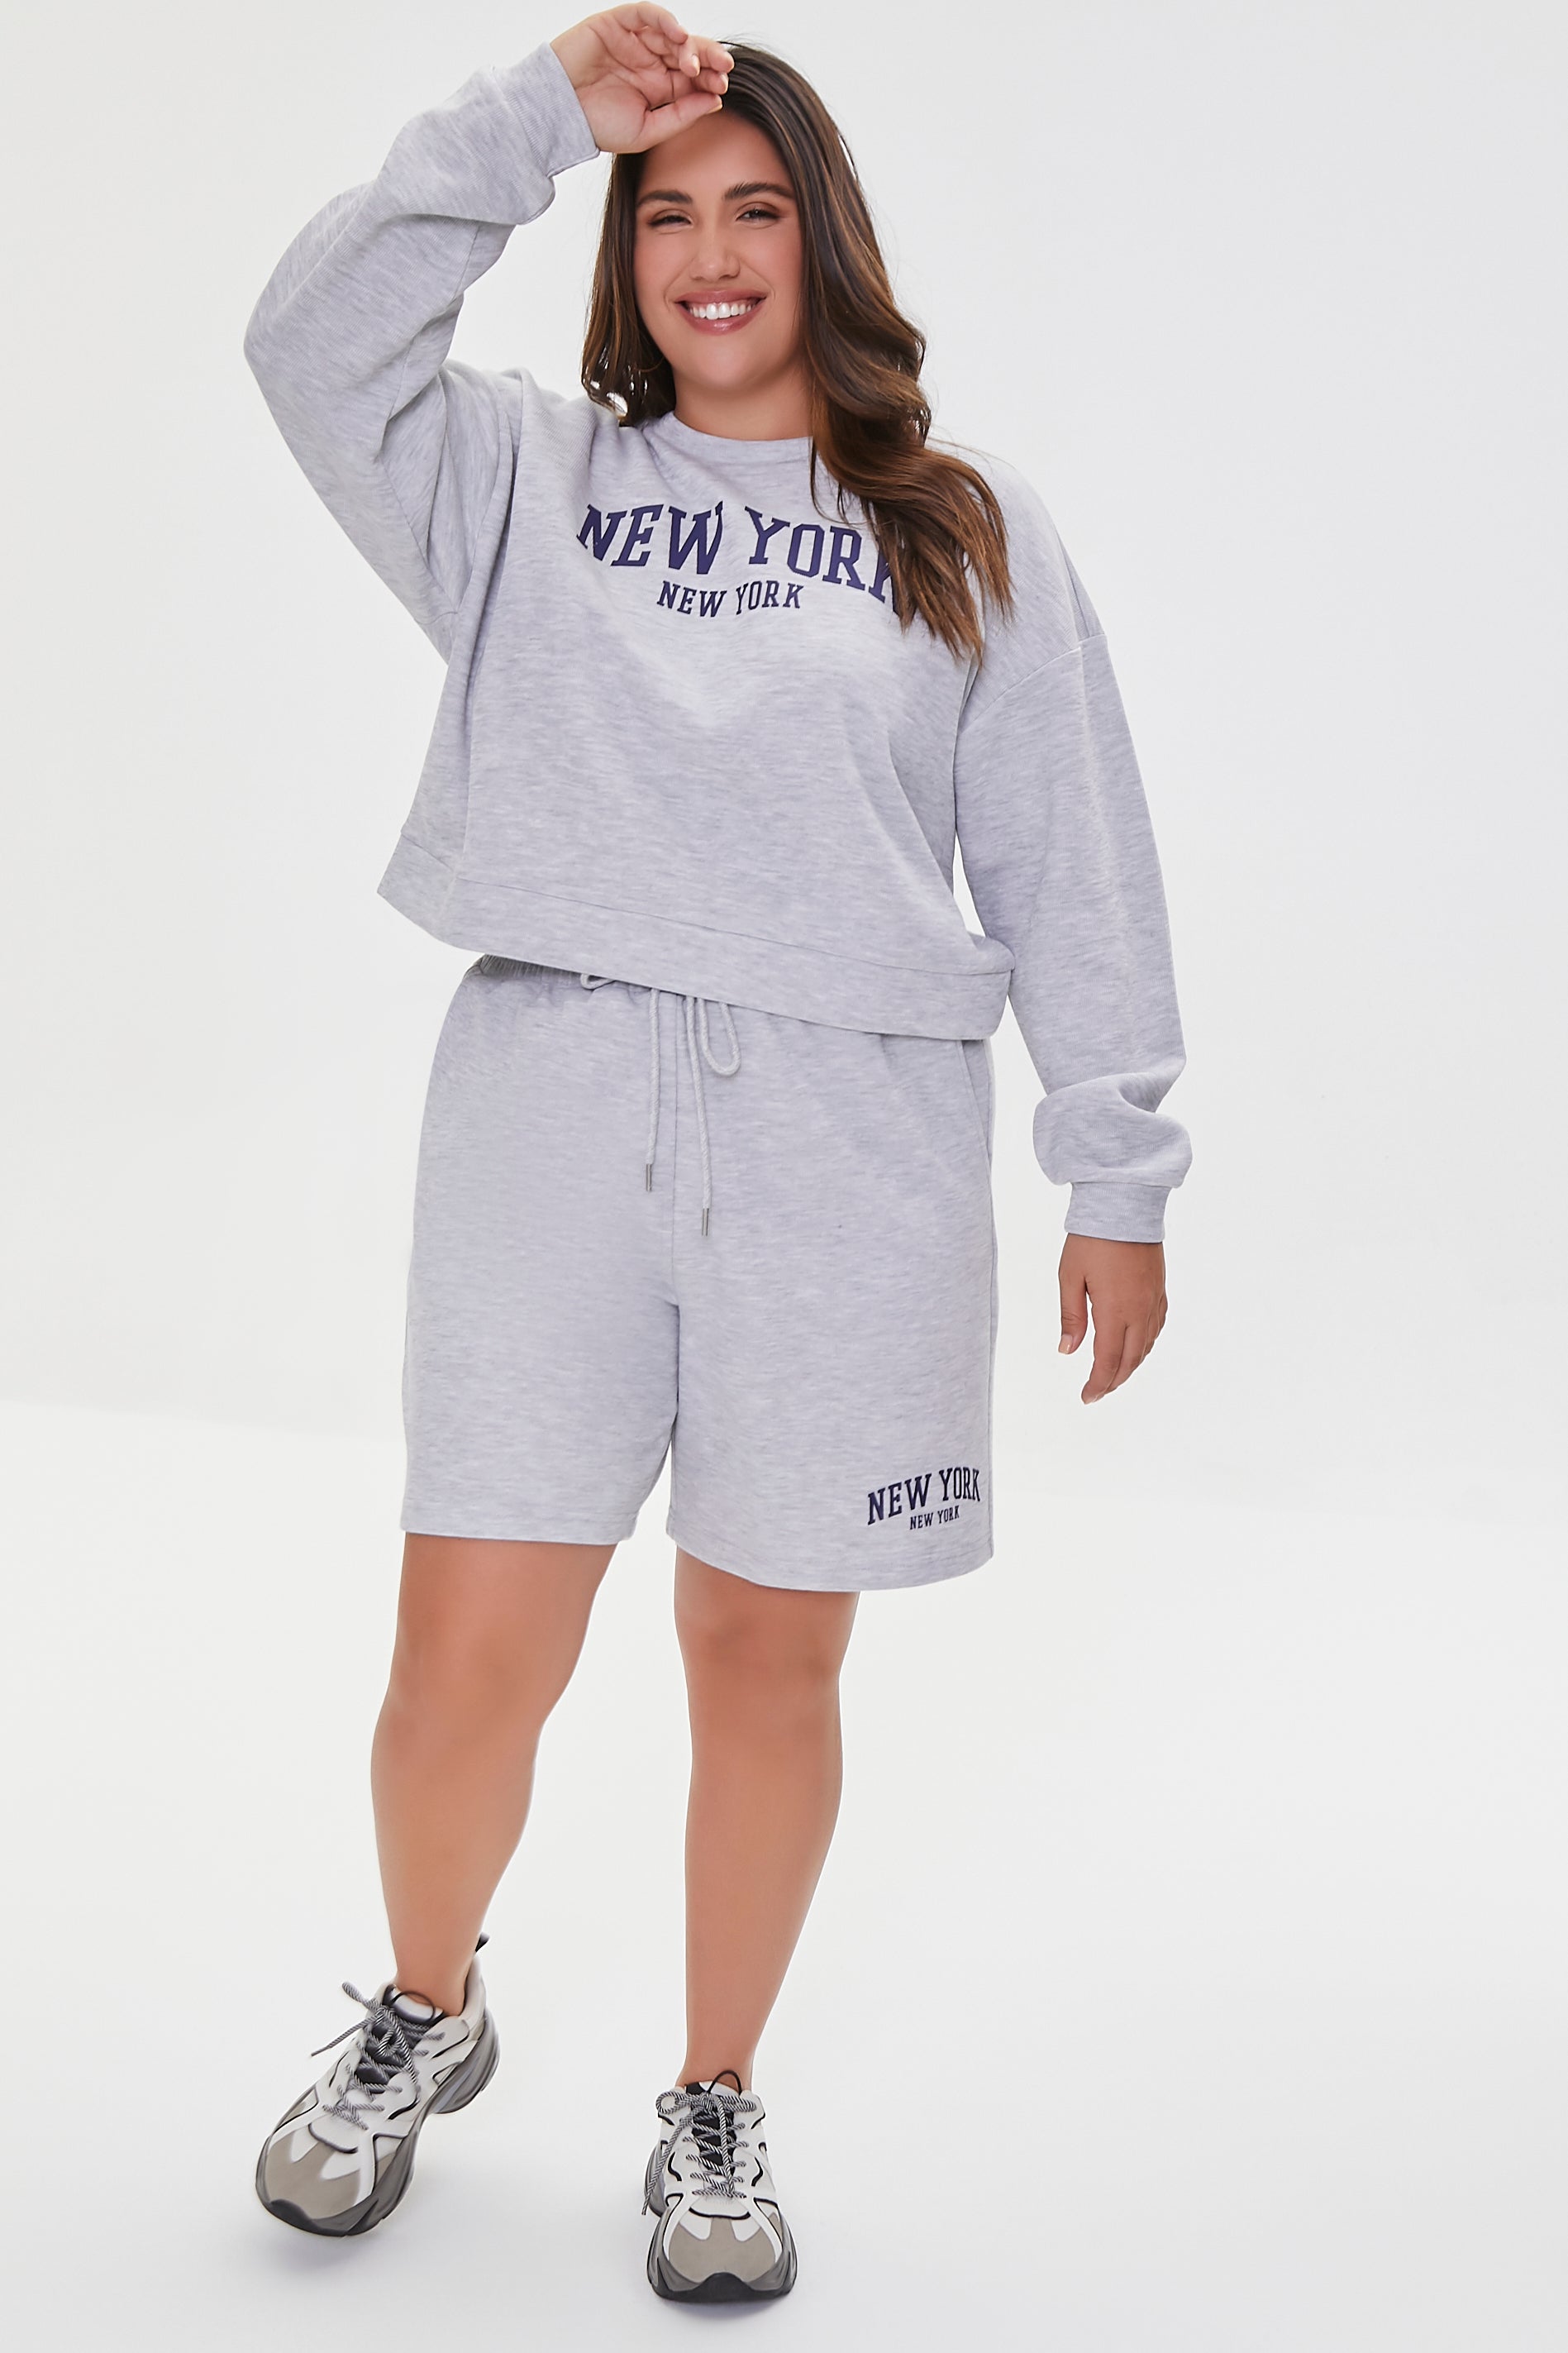 Heathergreynavy Plus Size New York Graphic Pullover 